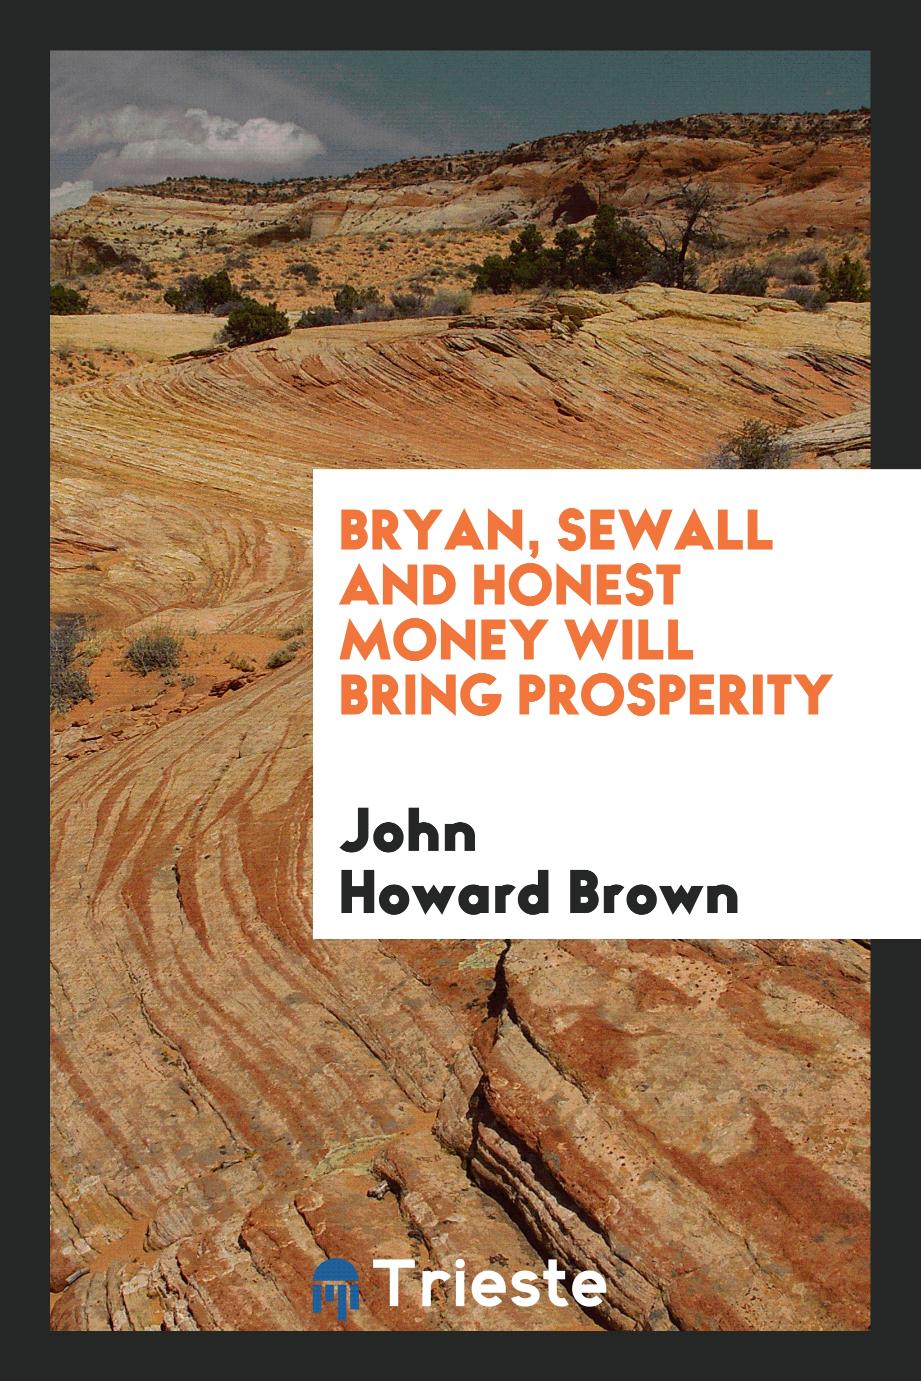 Bryan, Sewall and honest money will bring prosperity